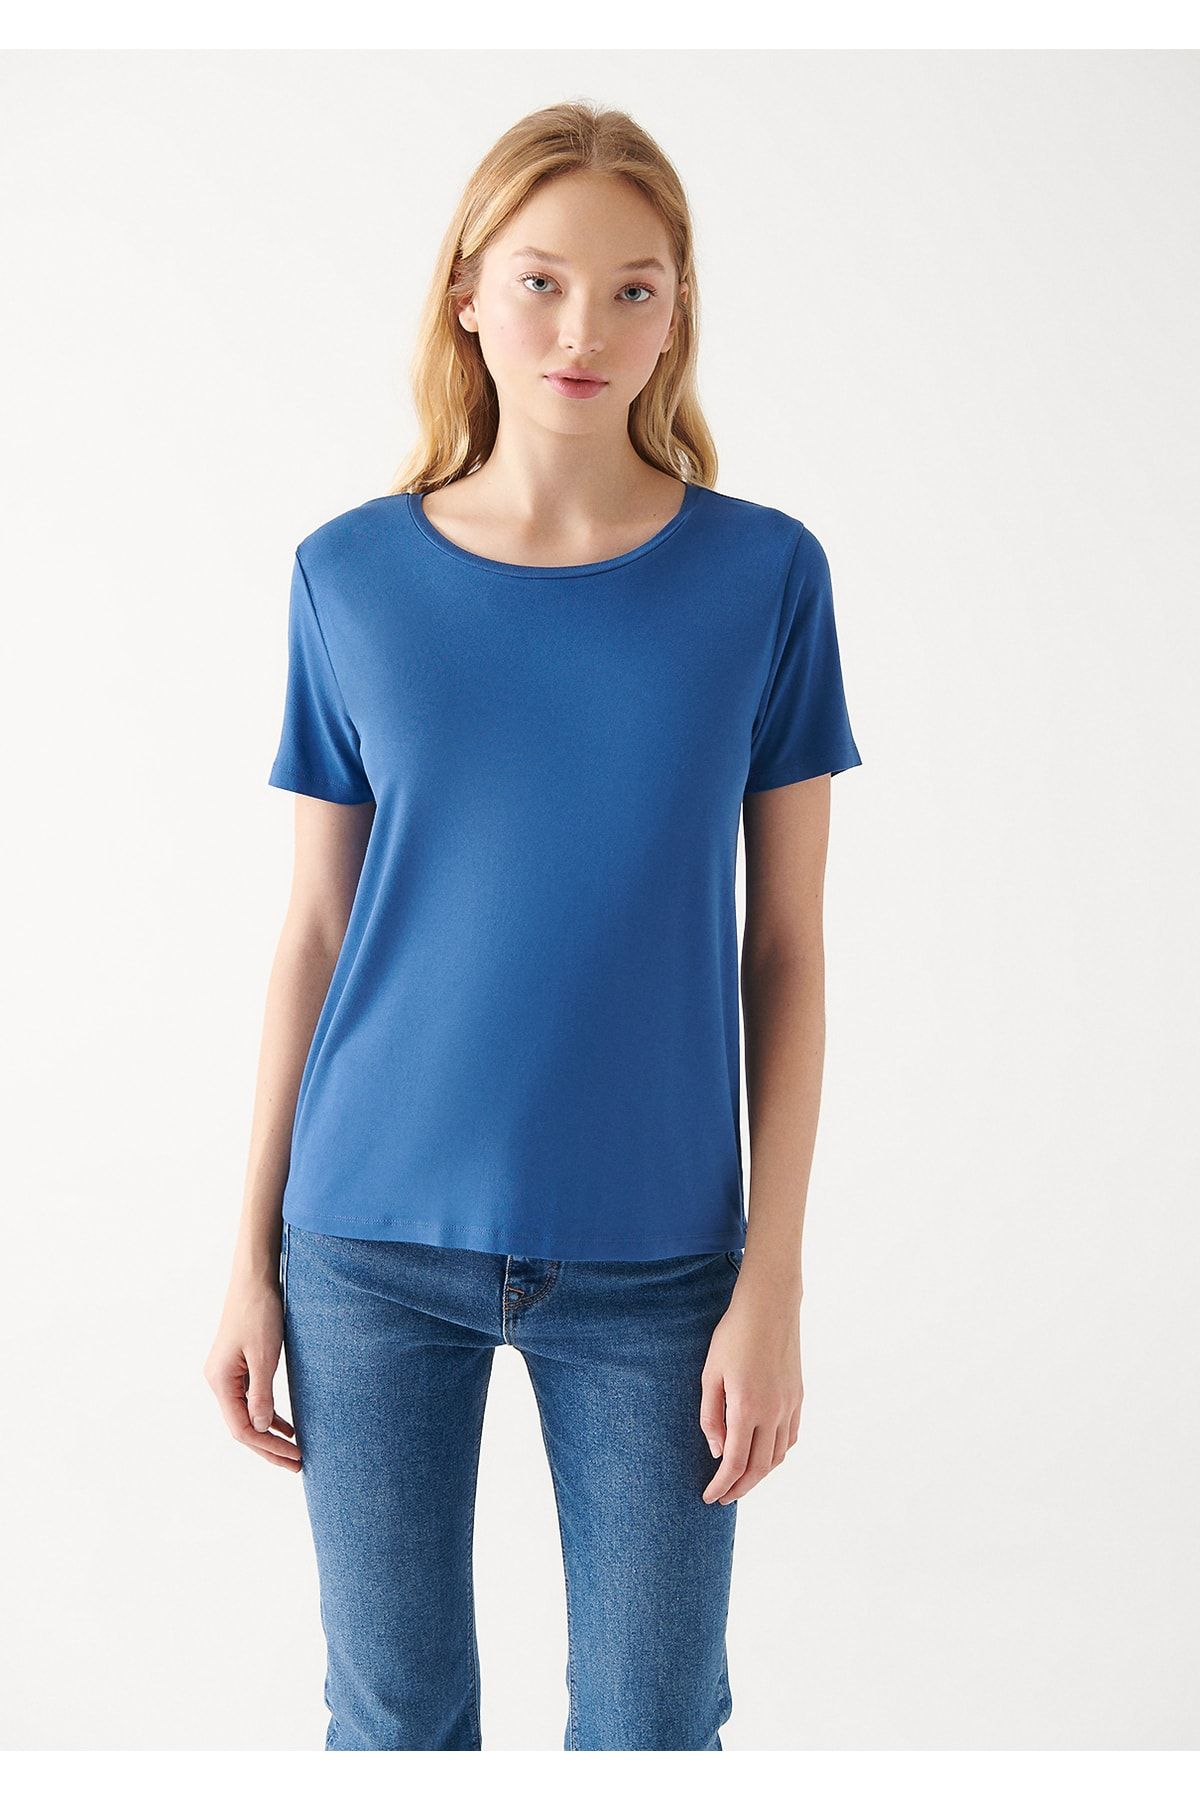 Mavi تی شرت پایه یقه خدمه با تناسب معمولی / برش 1610634-70719